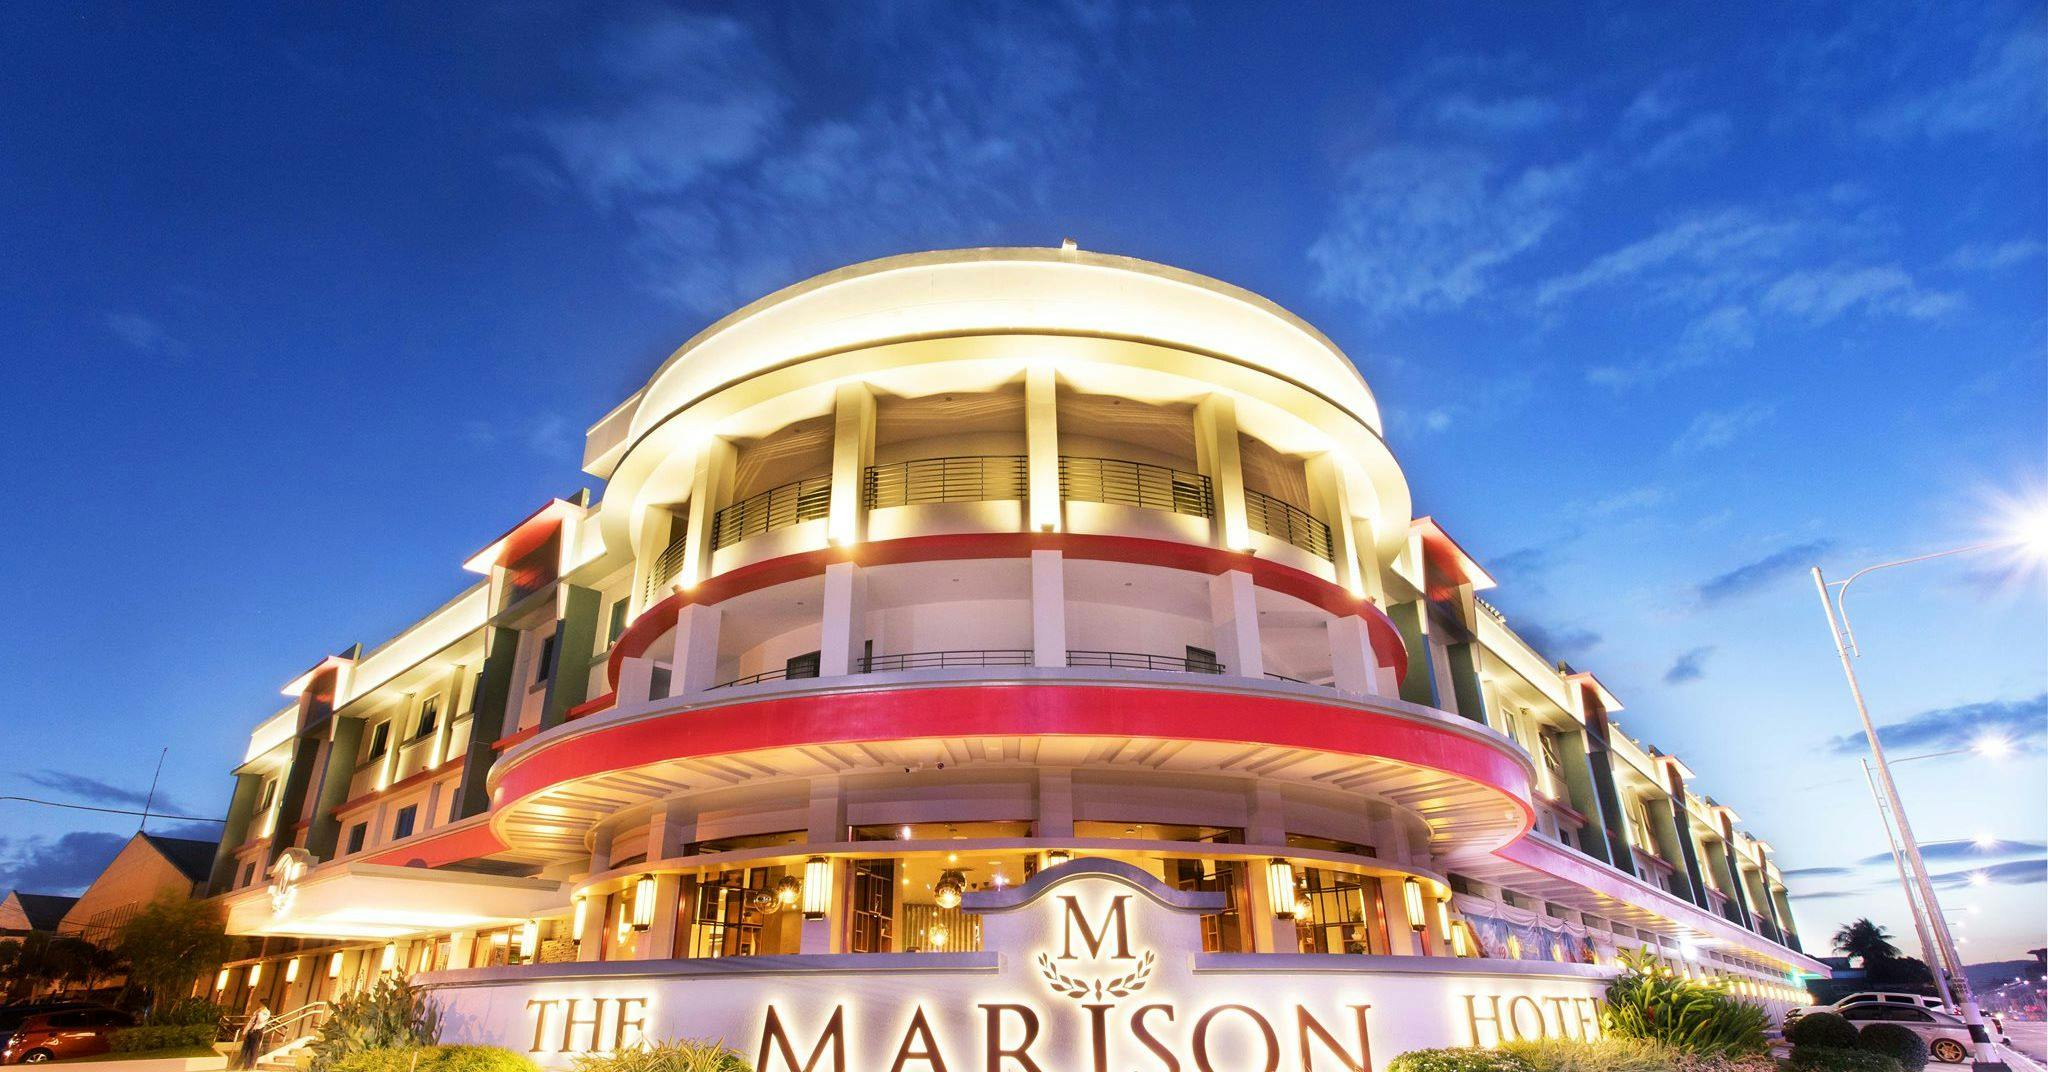 Exterior of The Marison Hotel Legazpi City, Albay